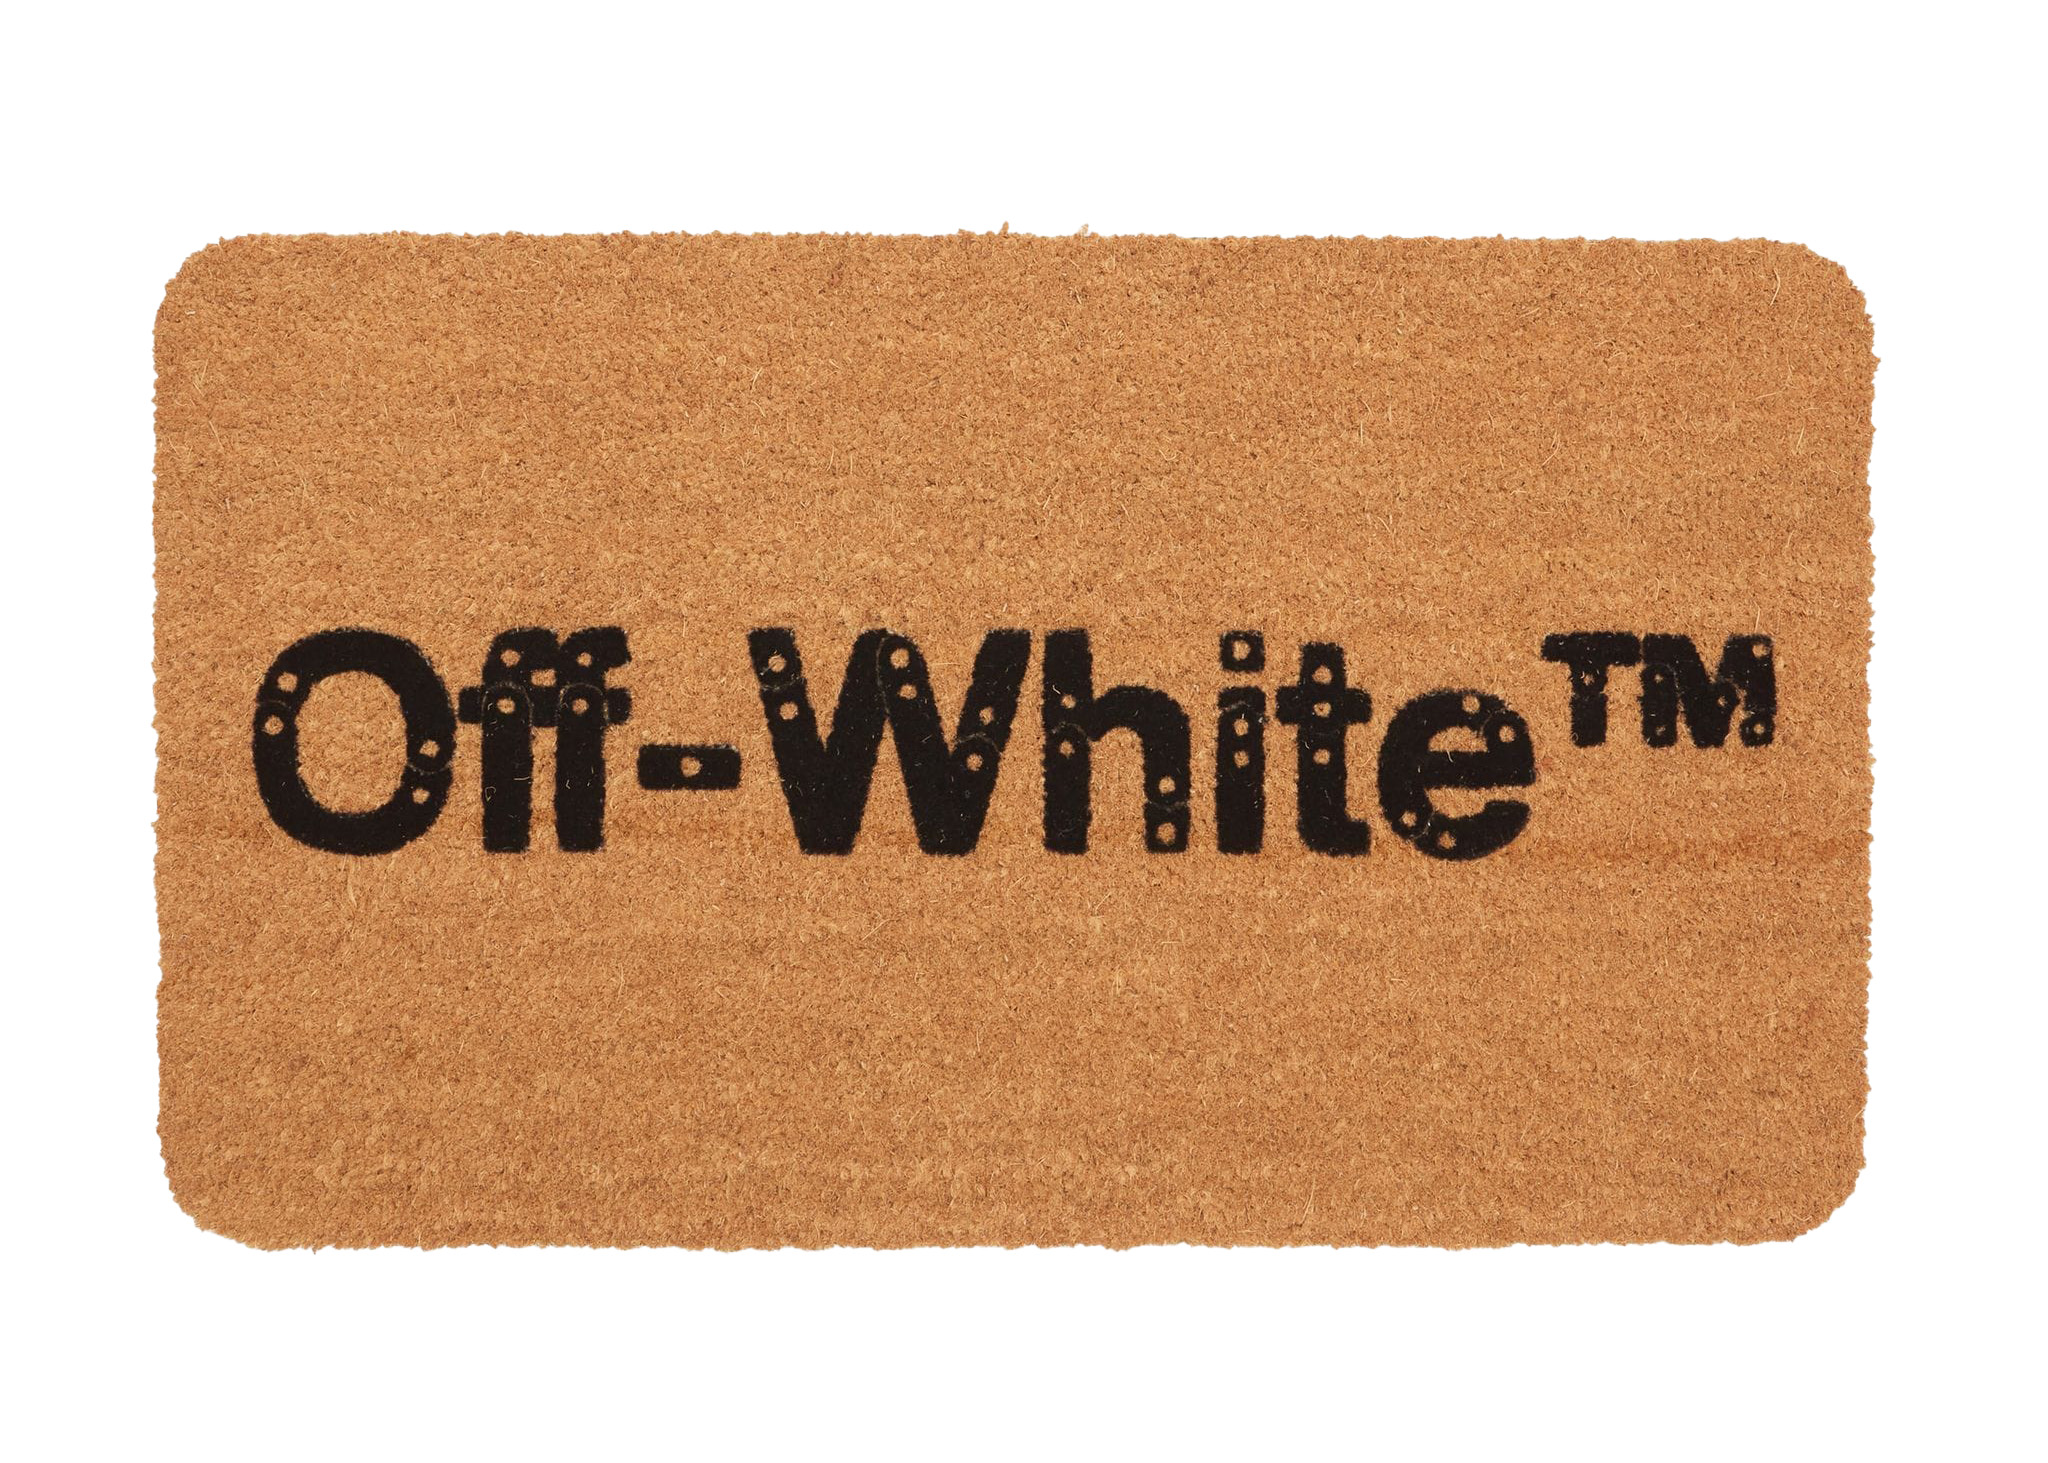 OFF-WHITE Logo Print Doormat